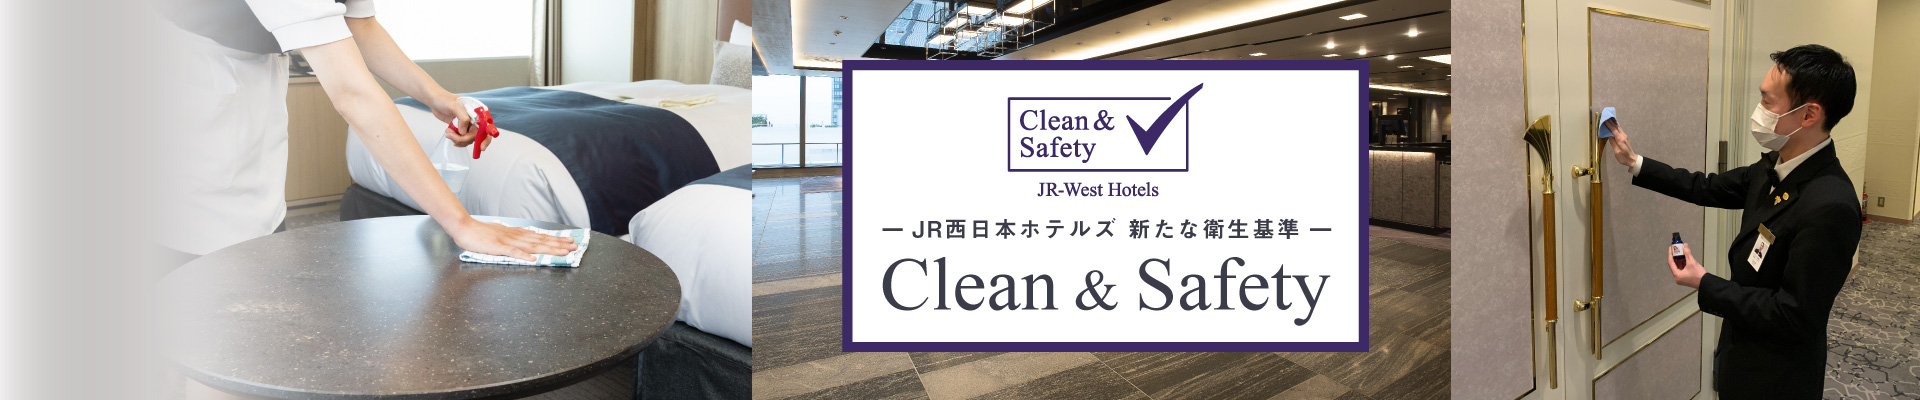 「Clean&Safety」安全・安心への取組みについての案内ページです。